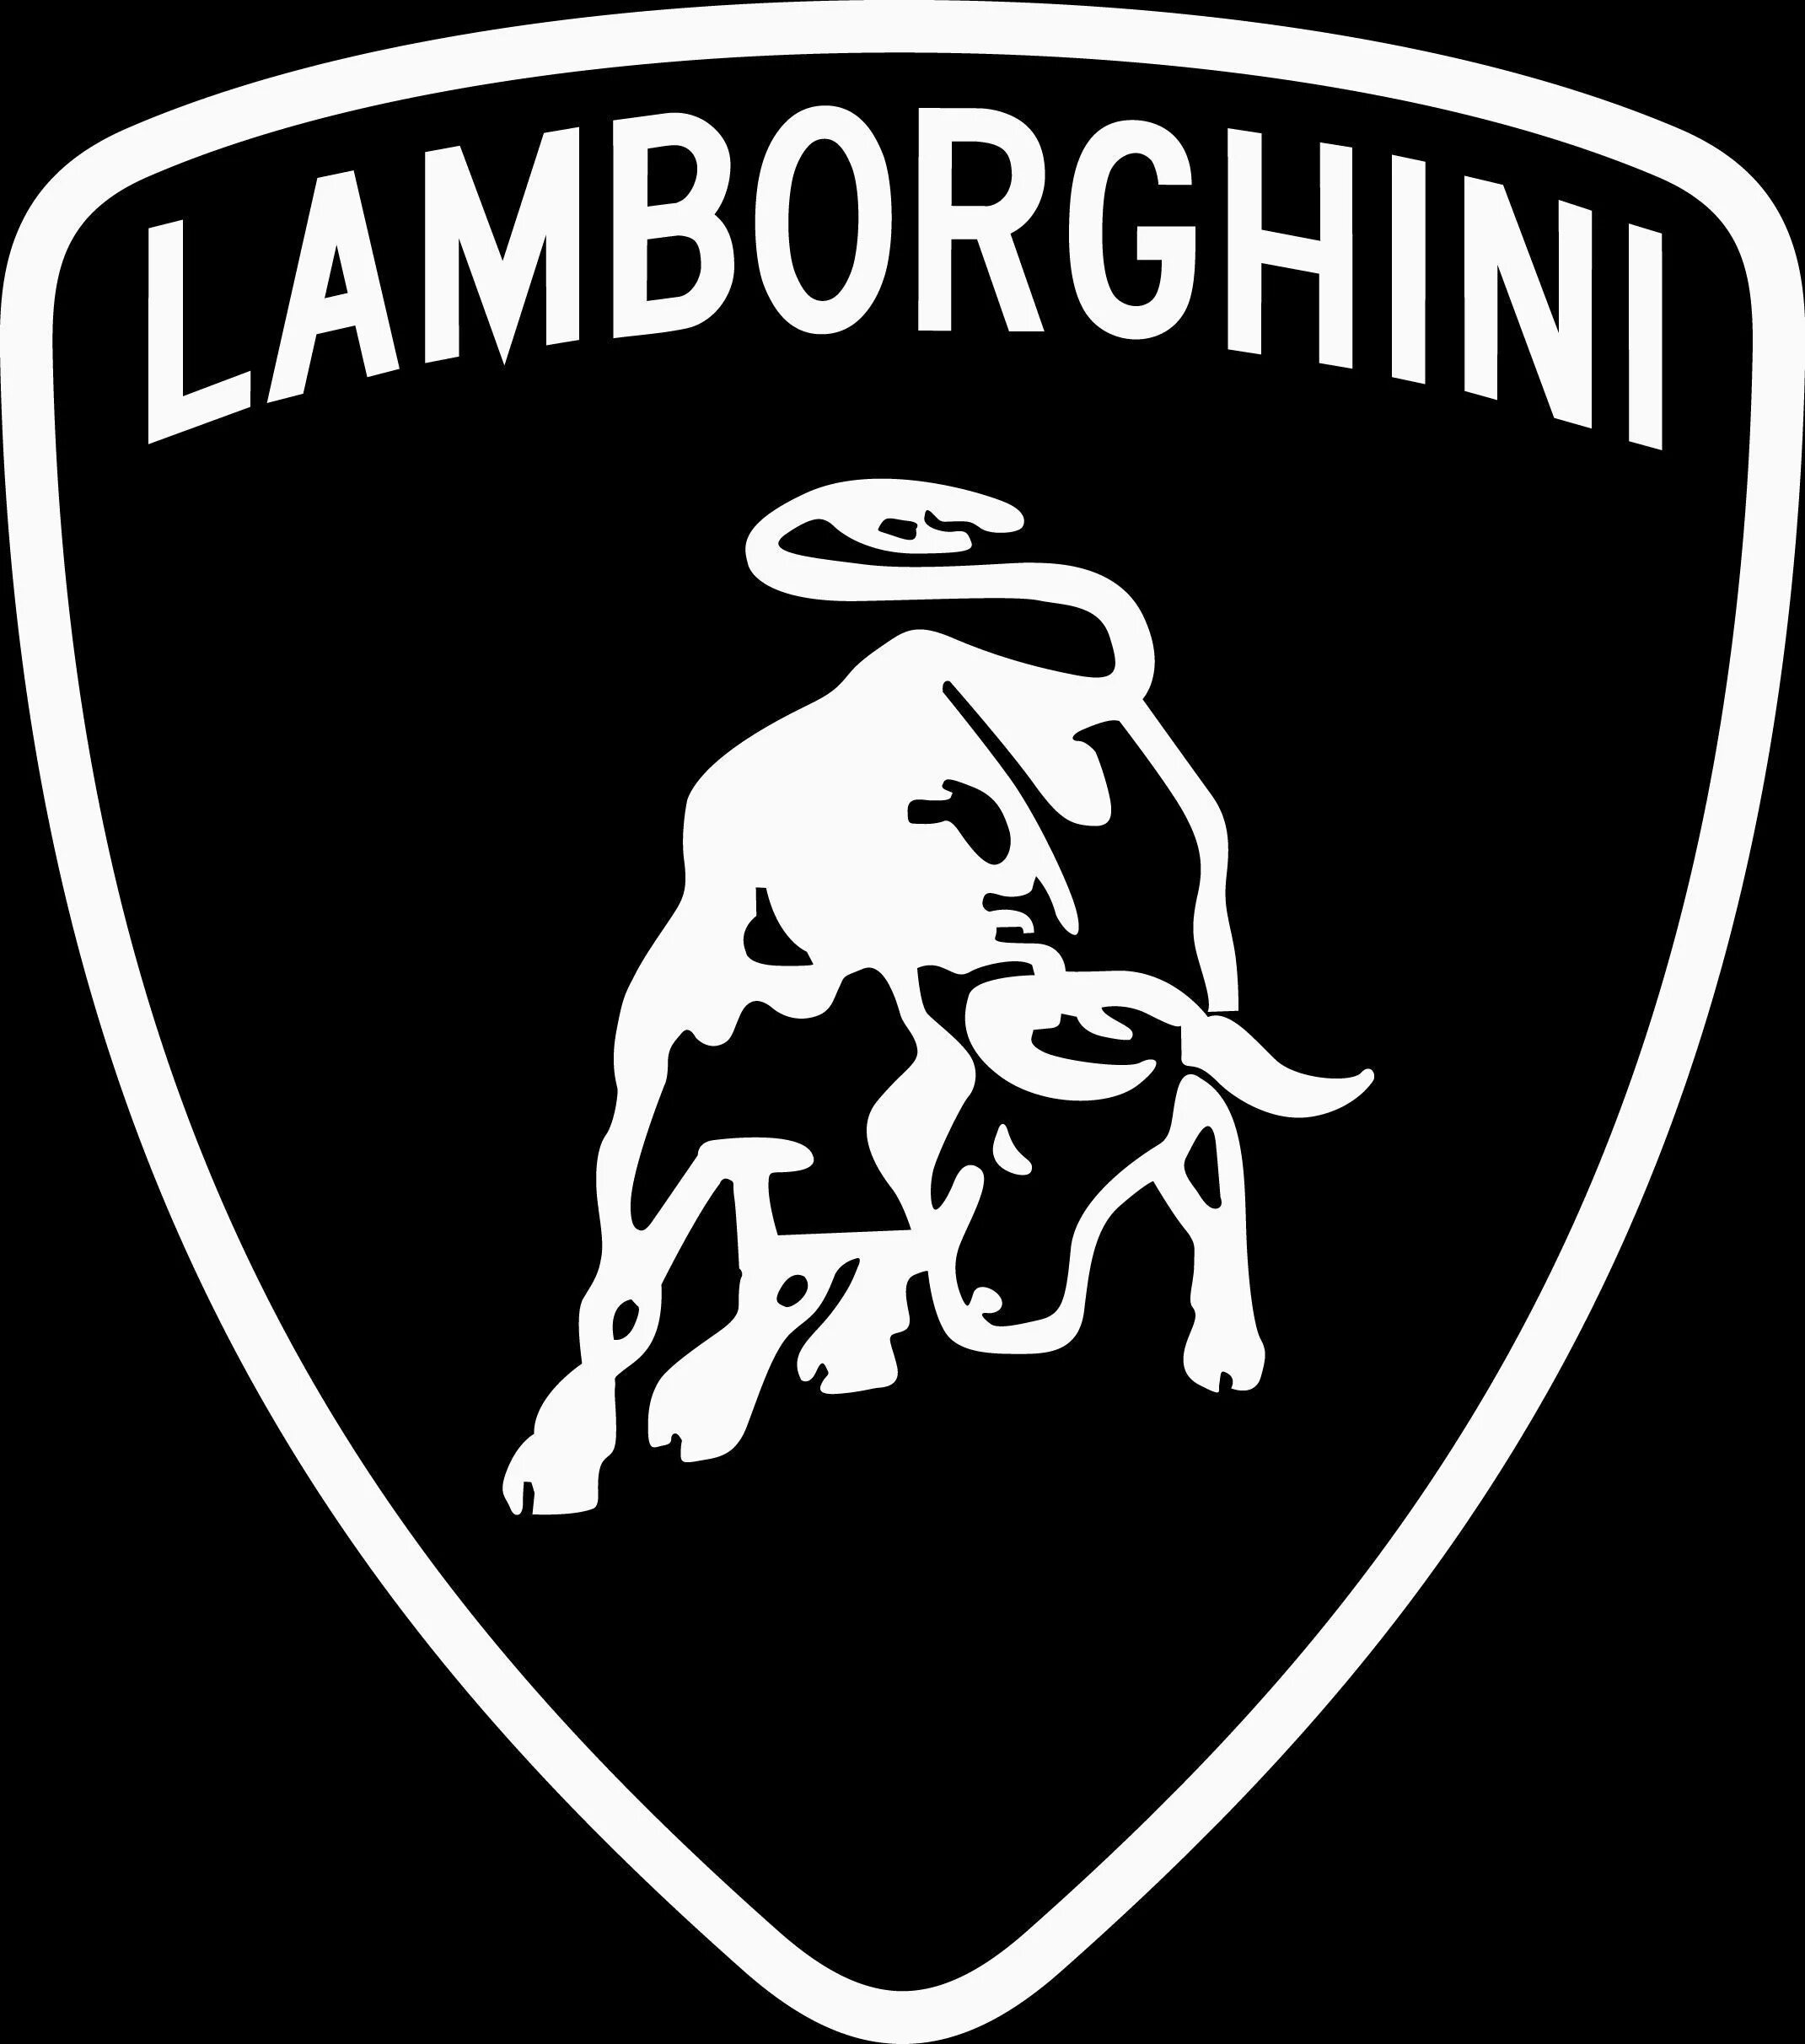 Ламба значок. Значок Ламборджини. Ламба логотип. Ламборджини лого вектор. Логотип Ламборгини черно белый.